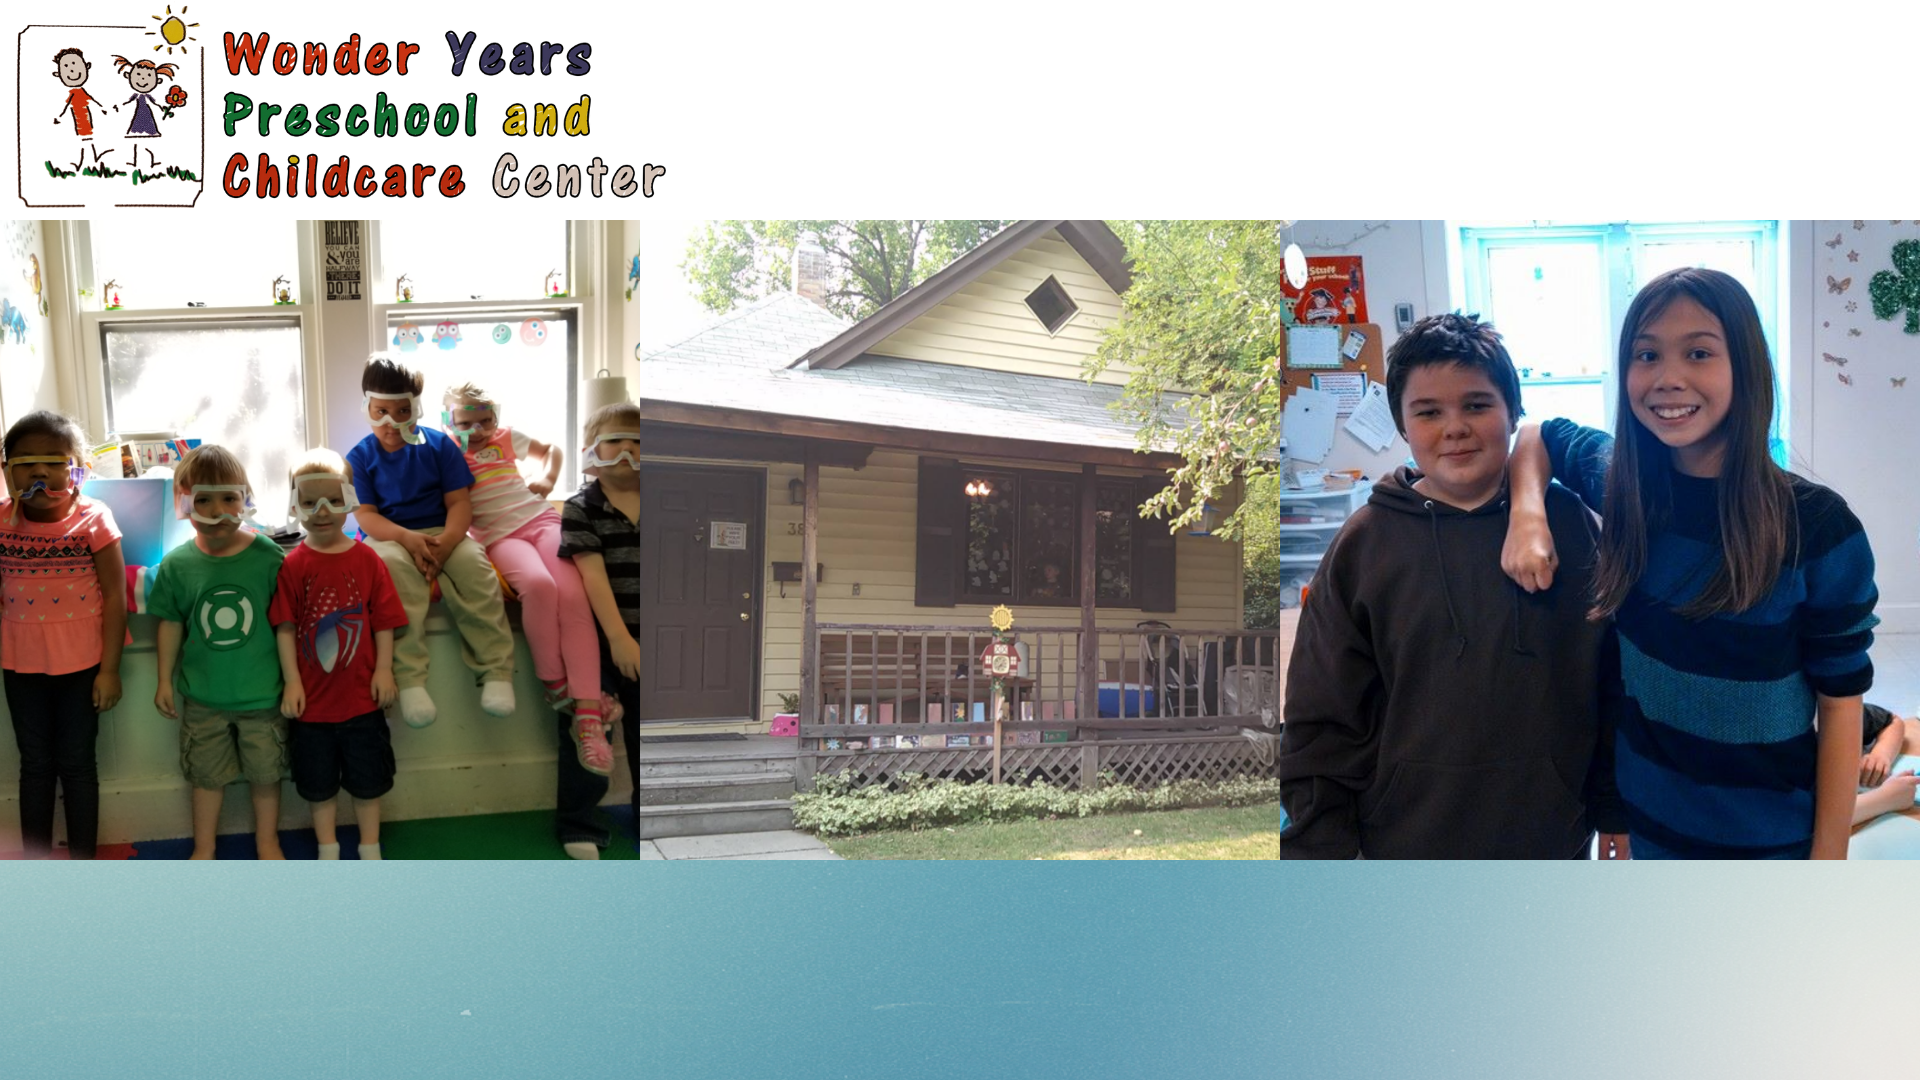 Children at Wonder Years Preschool and Childcare Center